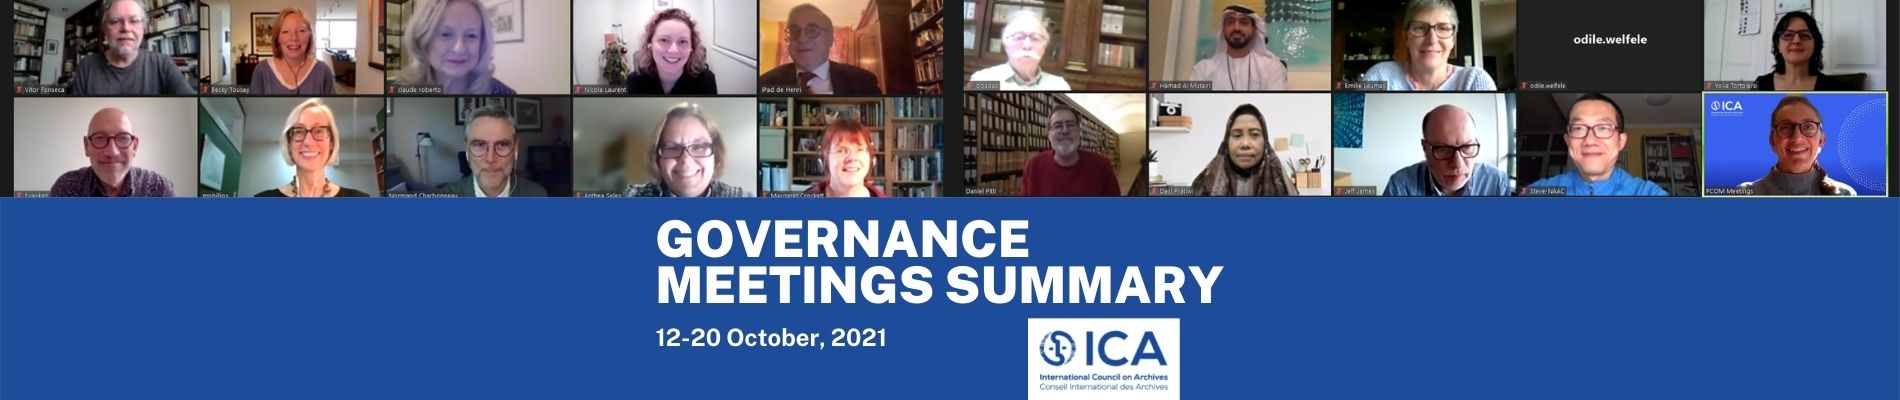 ica_governance_meetings_summary_-_website_banner_1900x400_eng